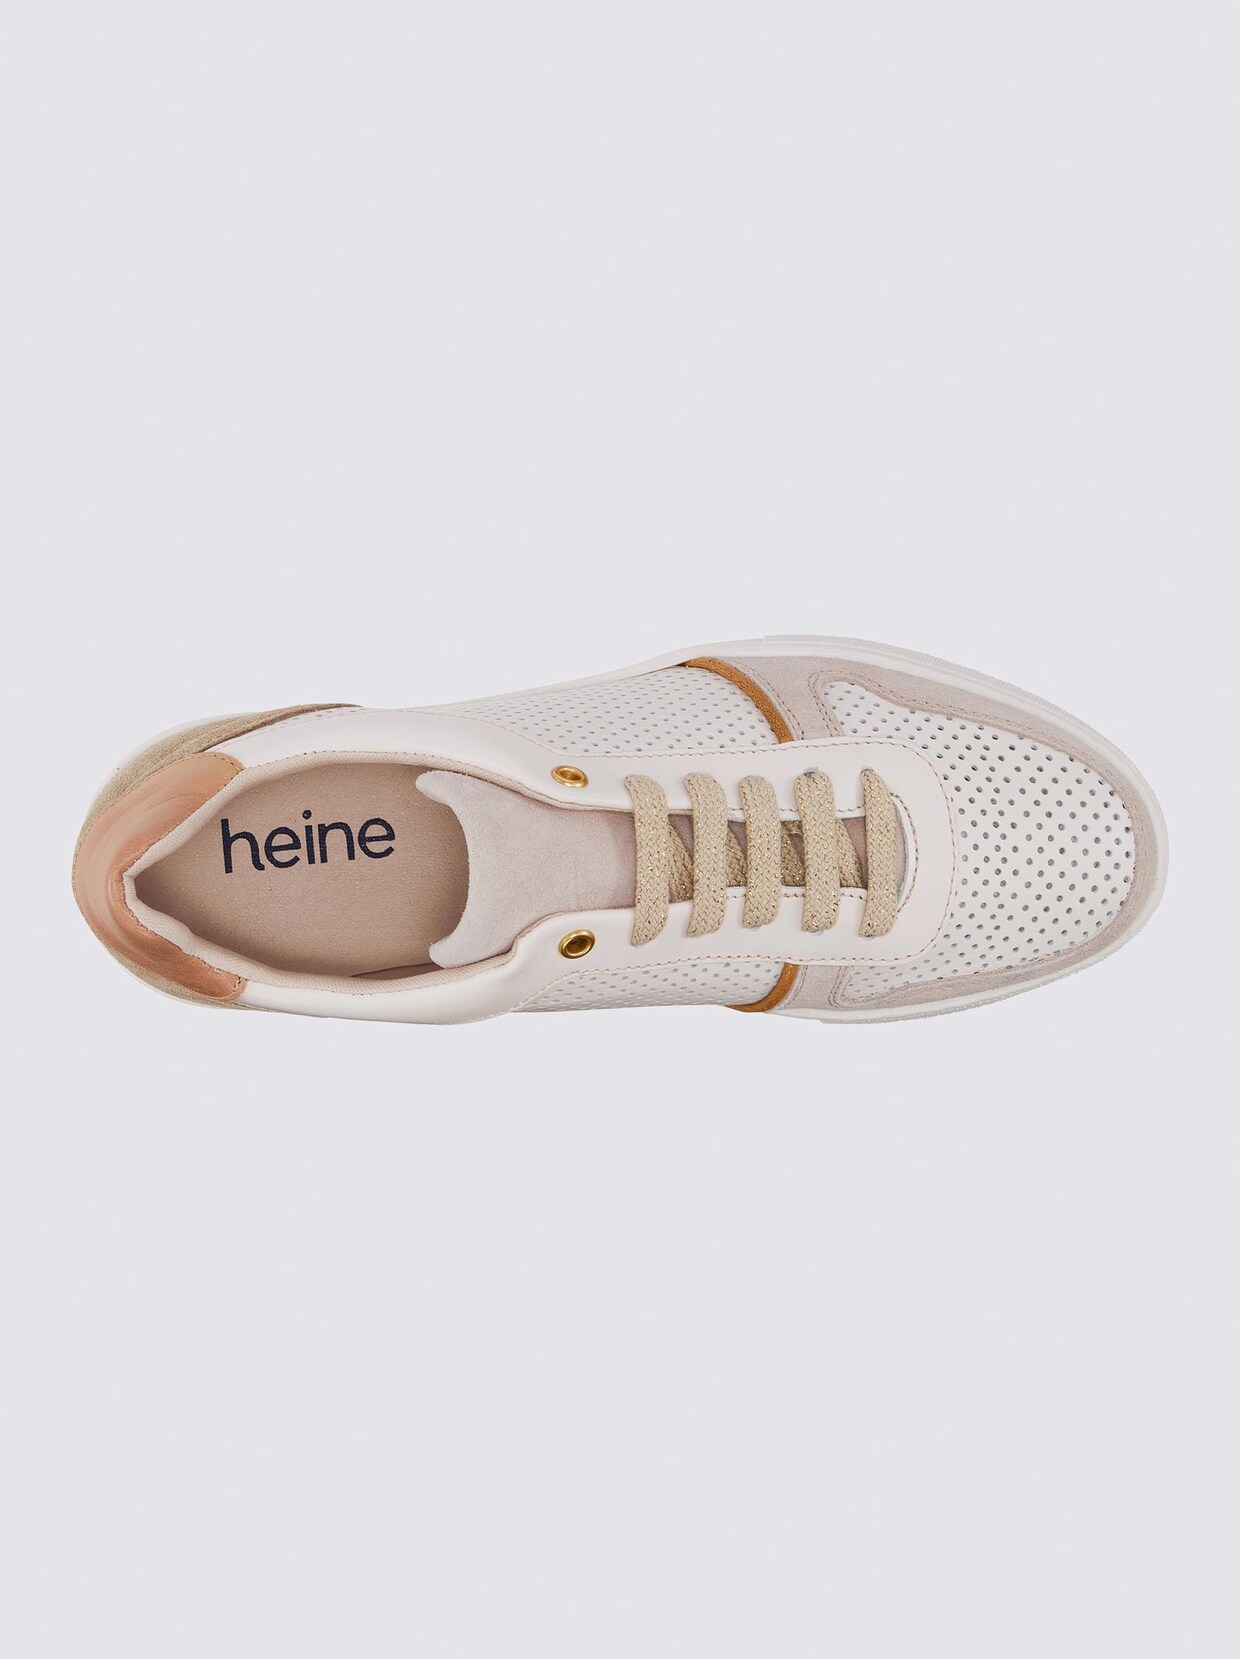 heine Sneaker - beige